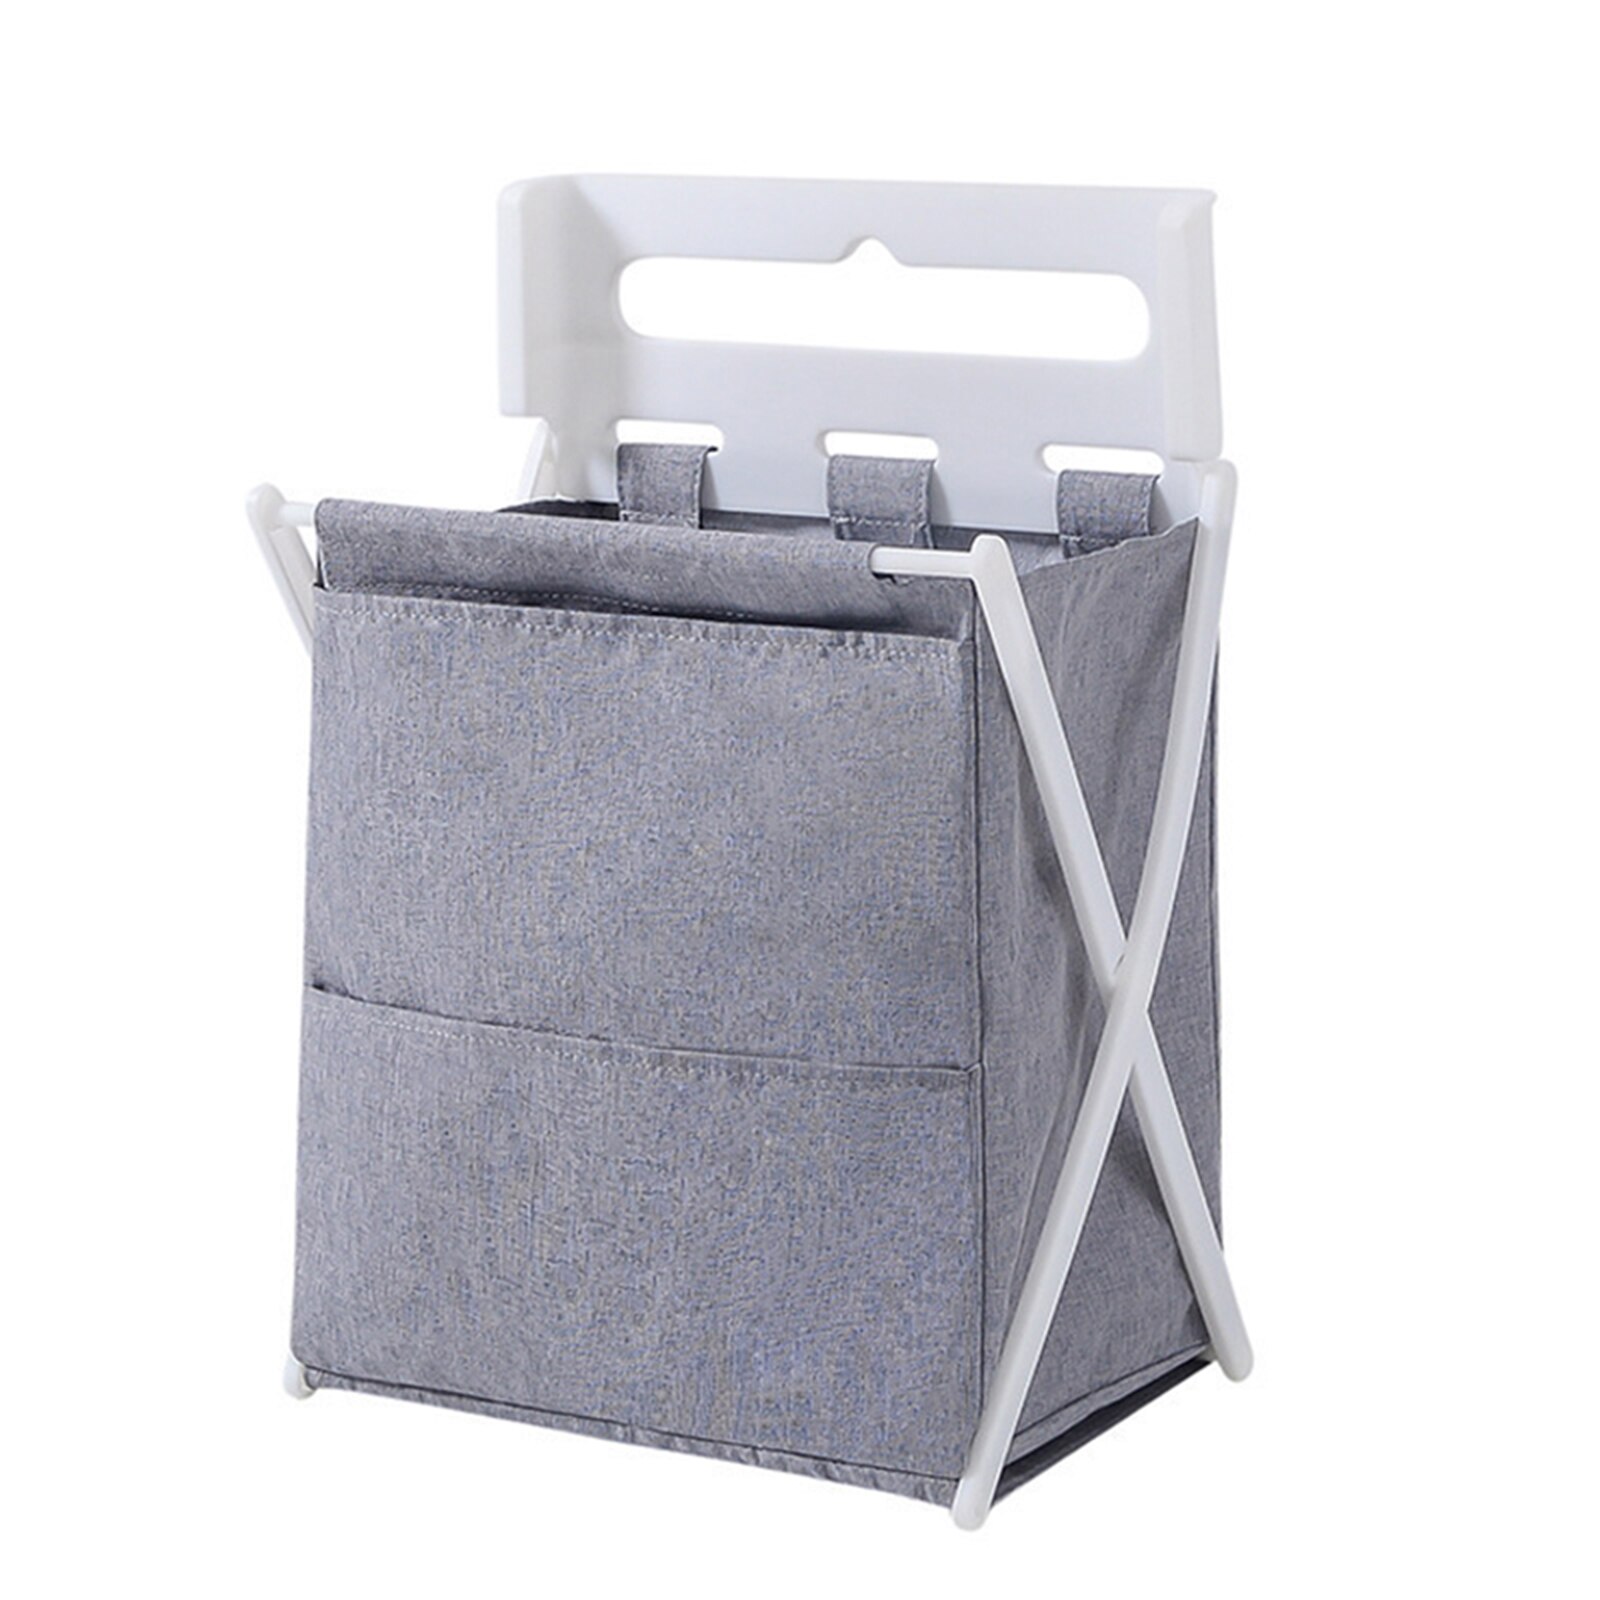 Wall Mounted Laundry Organizer Bag Foldable Washable Laundry Basket Home Clothes Storage Hamper @LS: light gray